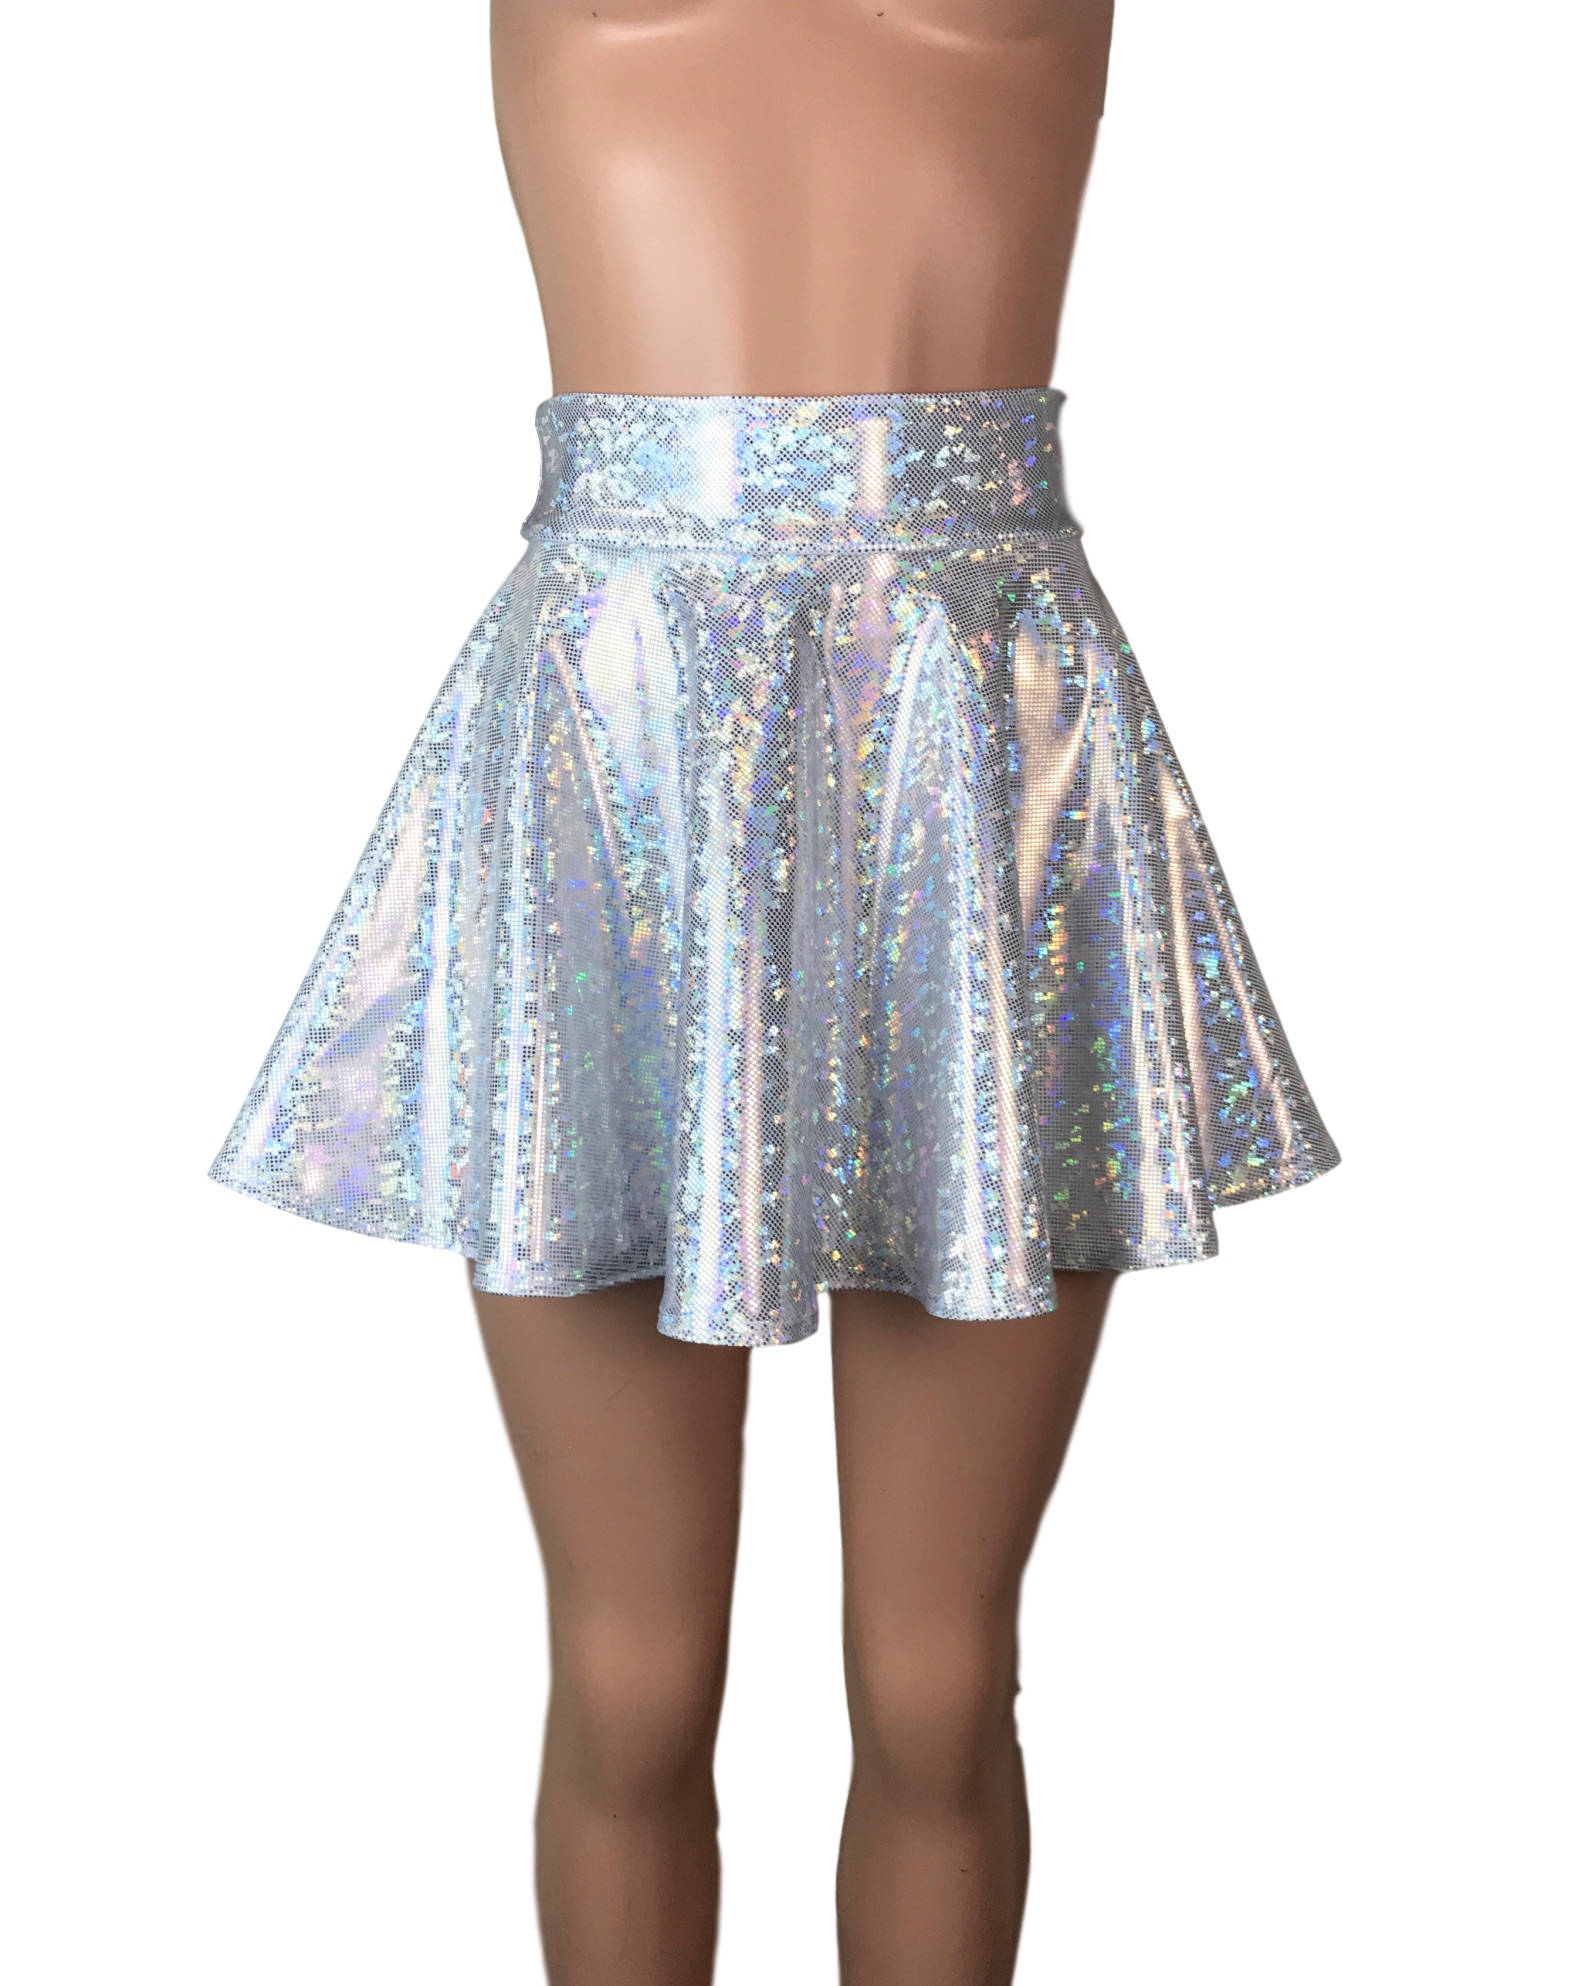 Silver Shattered Glass Holographic High Waisted Skater Skirt - Etsy